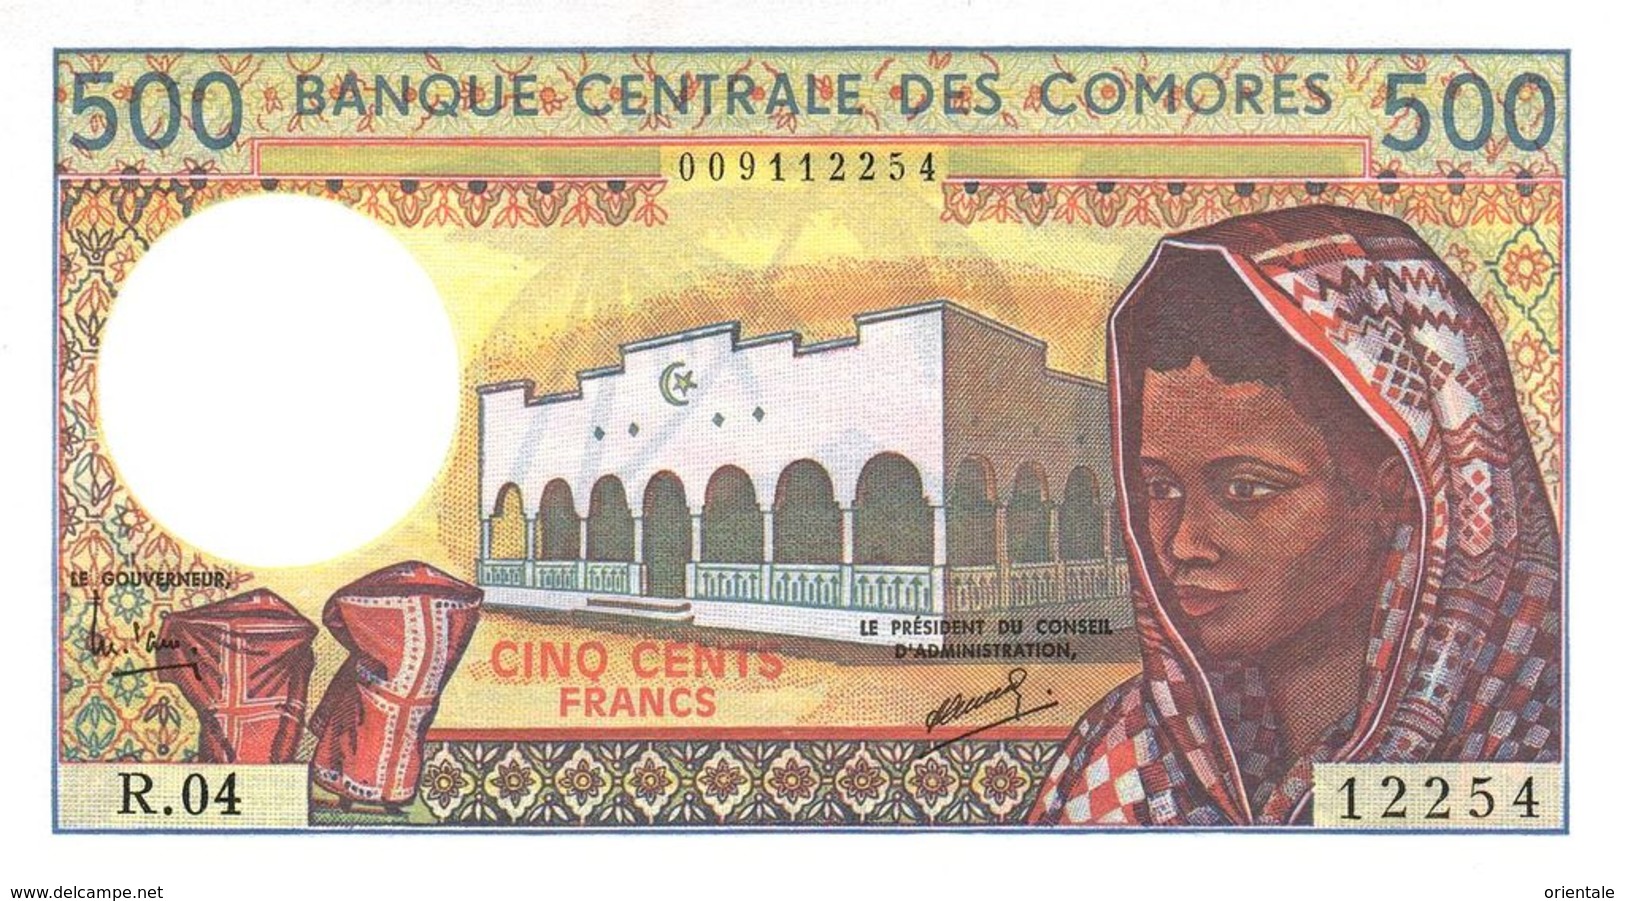 COMOROS P. 10b 500 F 1997 UNC (s. 8) - Comoros